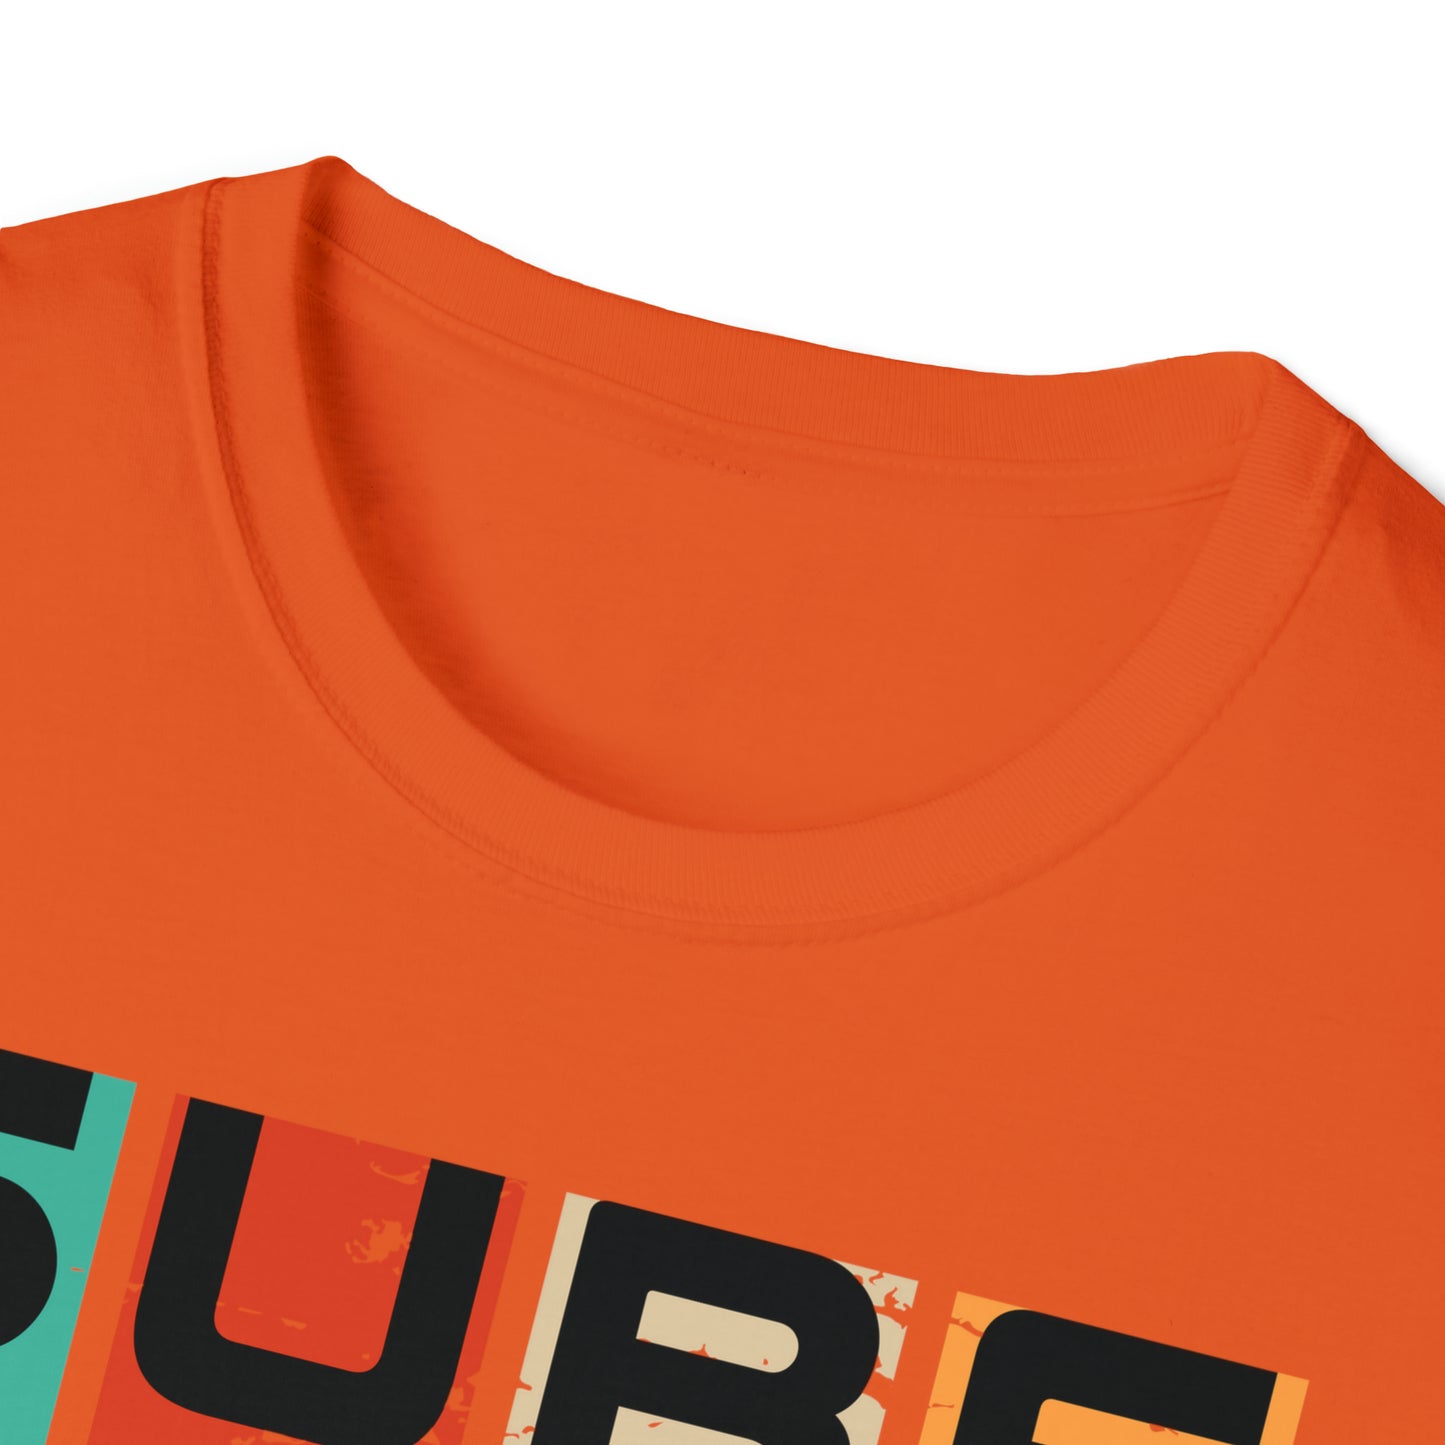 Surf California Graphic Tee Unisex Softstyle T-Shirt